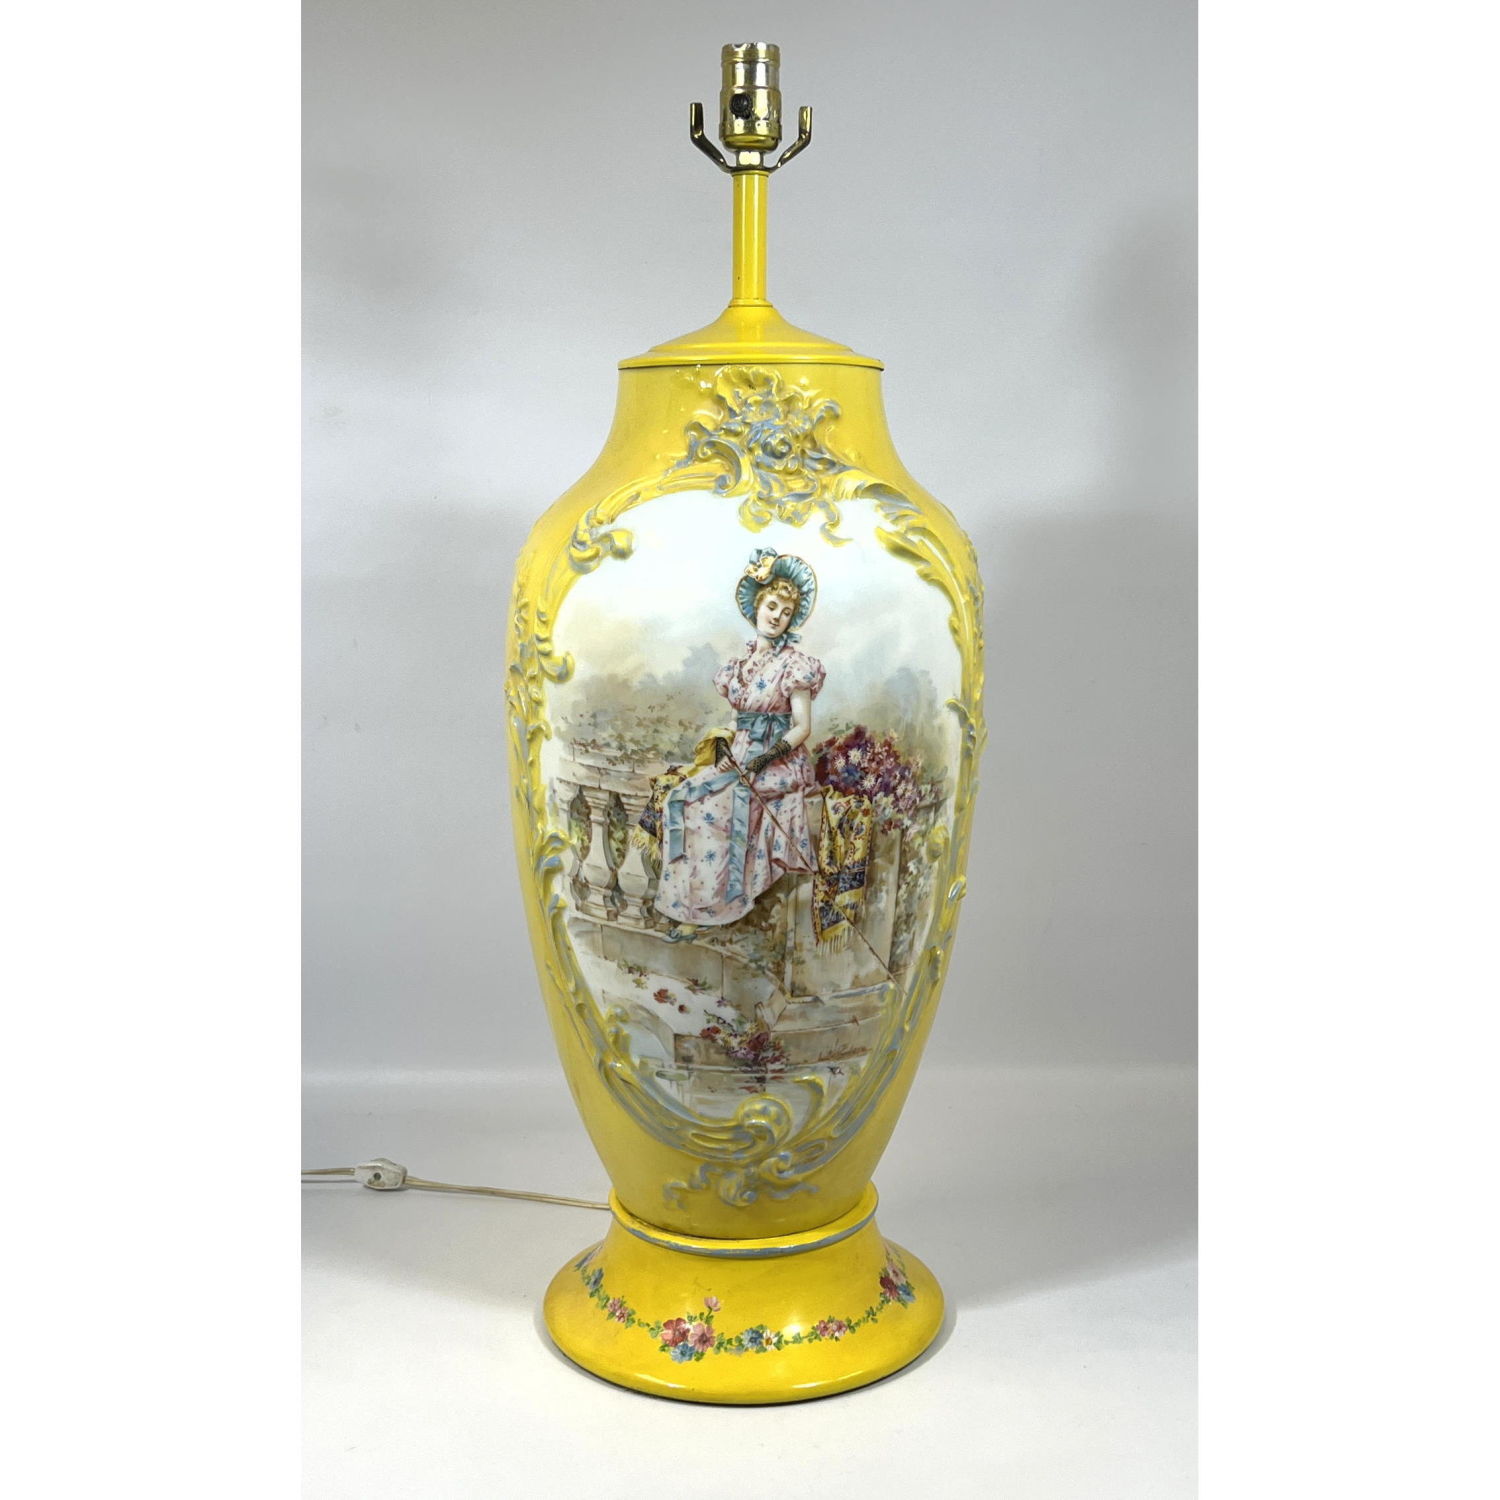 Vintage Porcelain Table Lamp. Decal